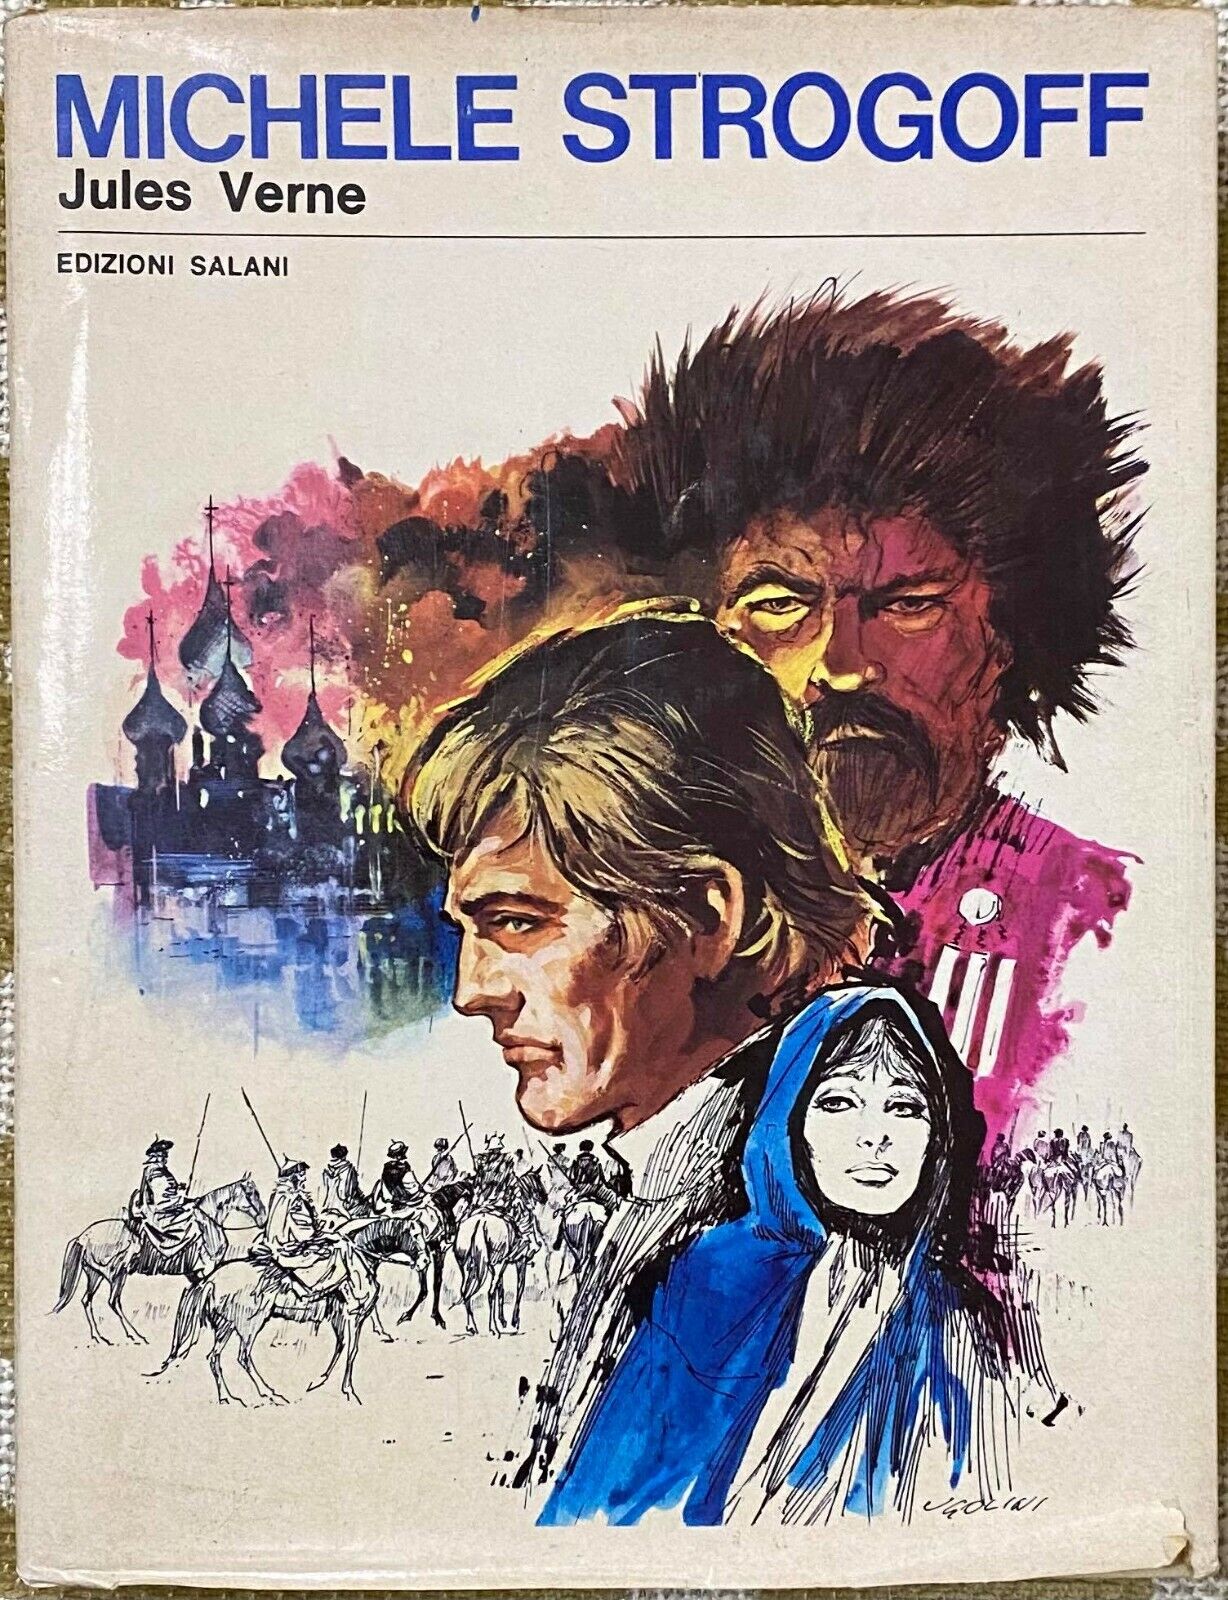 Michele Strogoff - Jules Verne - Salani - 1971 - M